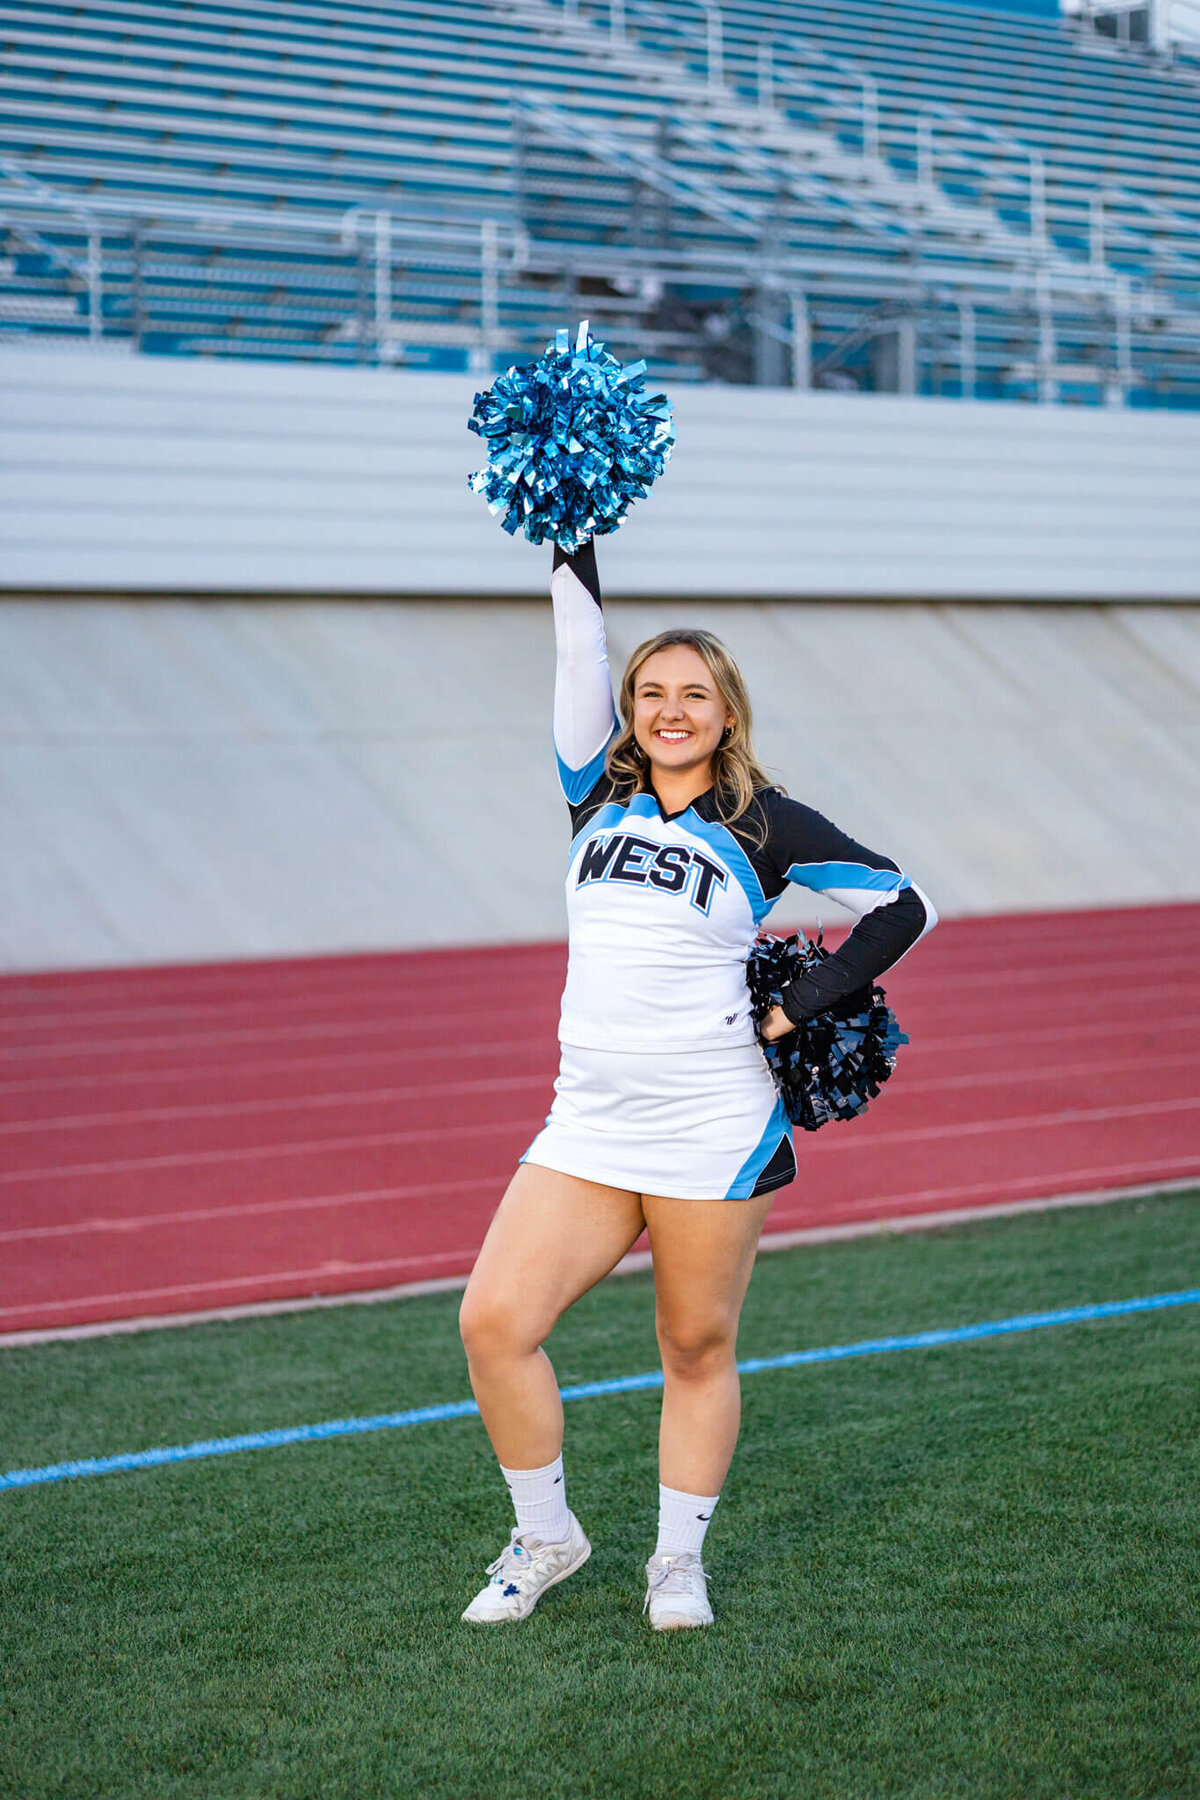 high school senior cheerleader posing on the football field in front of the stadium